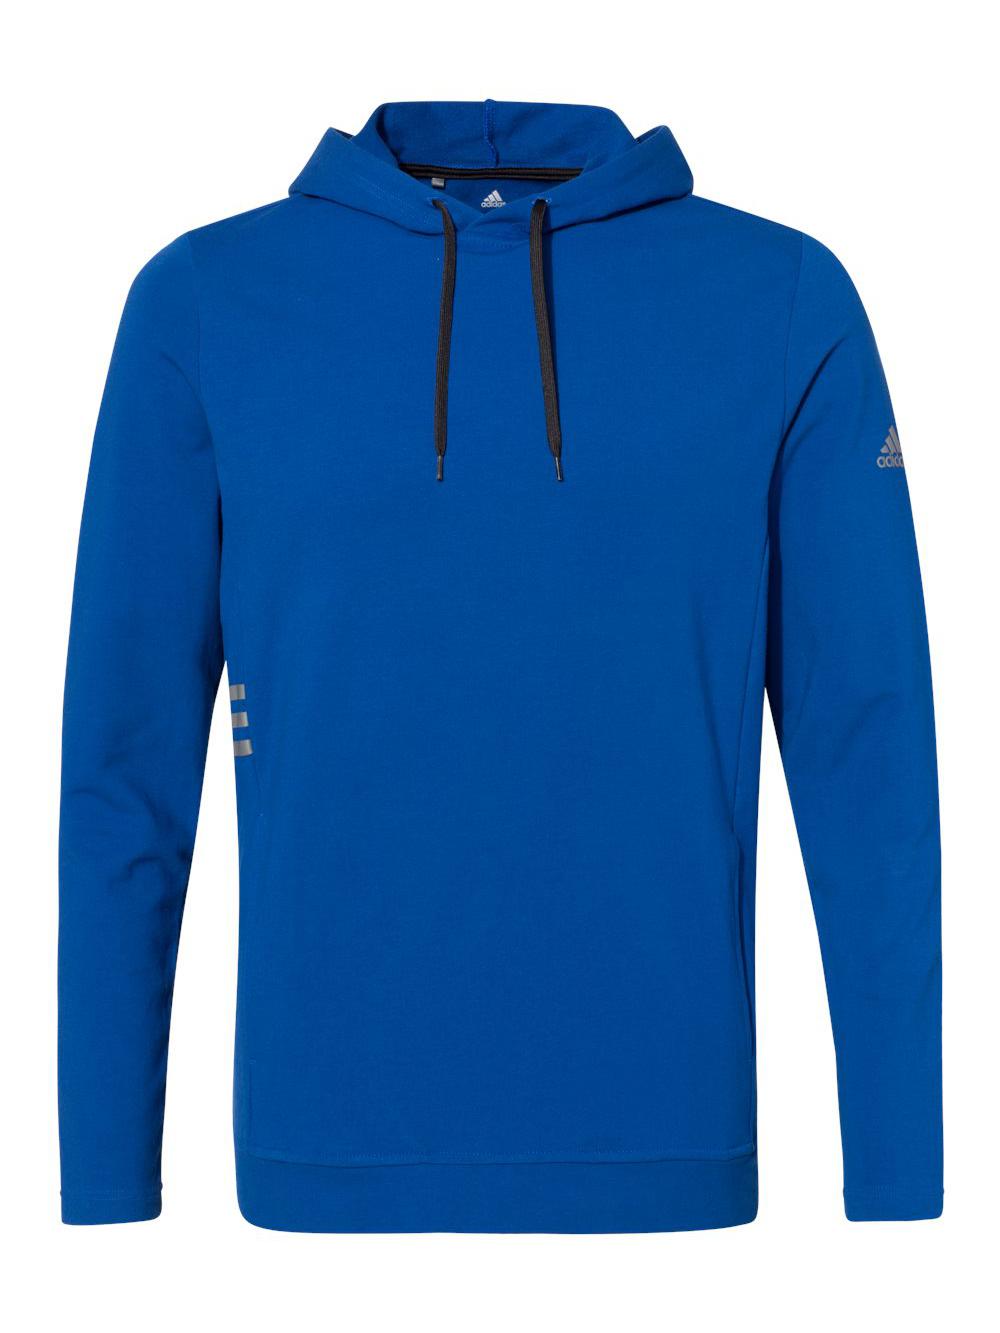 Adidas - Lightweight Hooded Sweatshirt - A450 - Collegiate Royal - Size: XL - image 2 of 3